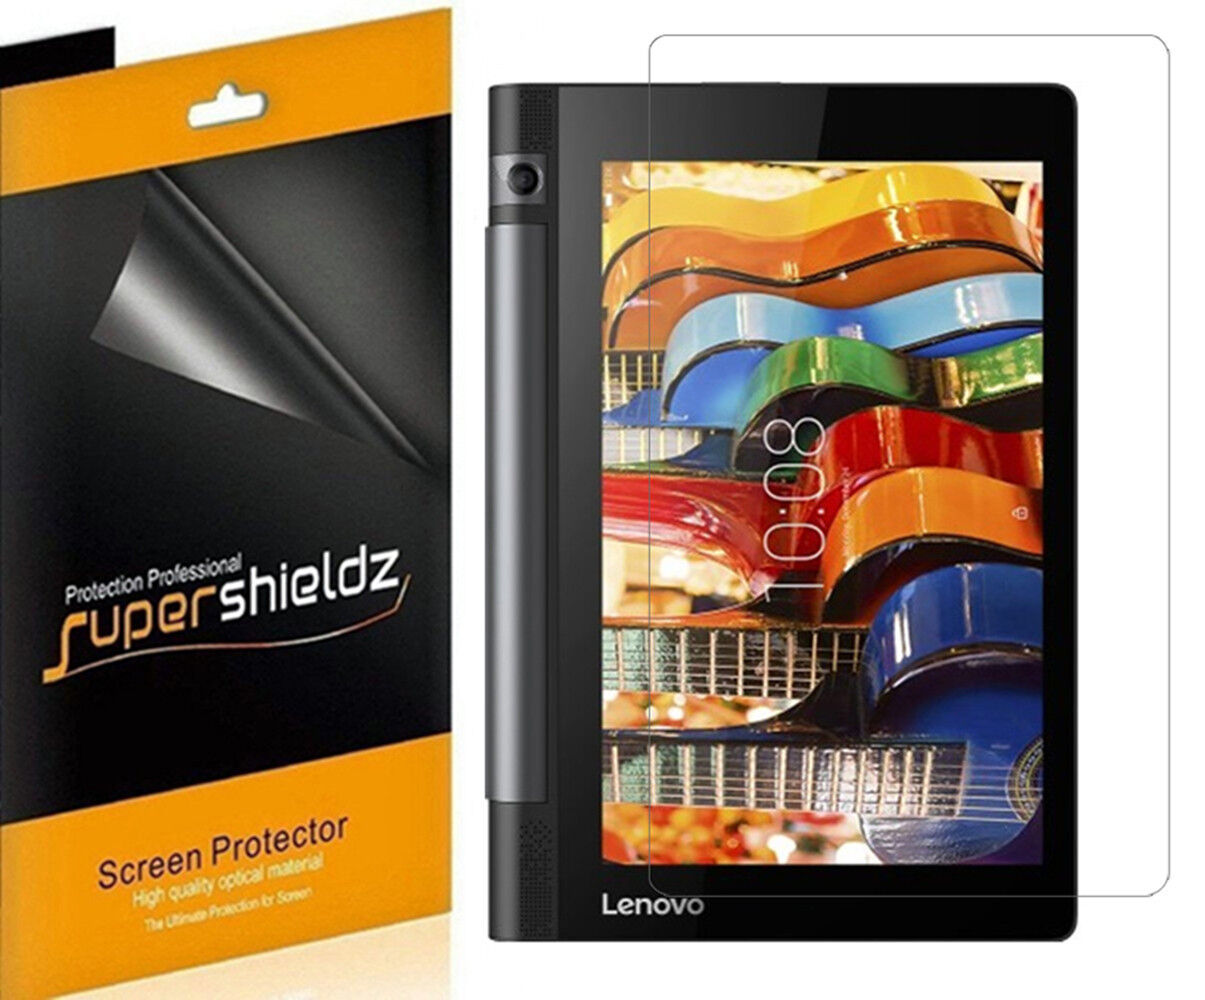 3X SuperShieldz Anti Max 75% OFF Glare Regular store Matte Screen for Lenovo Protector Yog